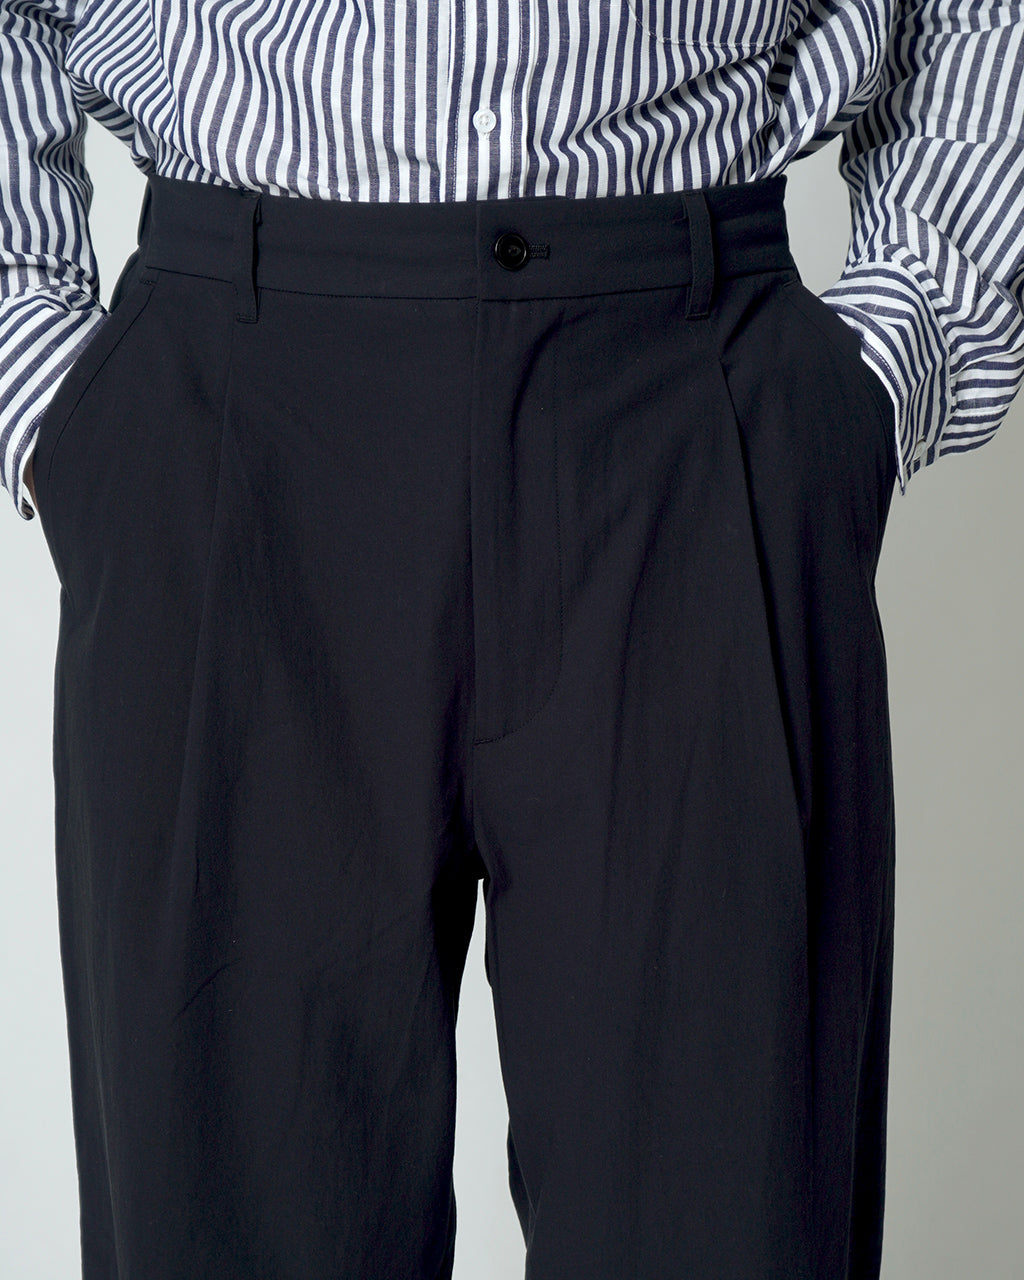 A Vontade アボンタージ ワンタック イージー トラウザーズ 1 Tack Easy Trousers パンツ スラックス VTD-0470-PT3【送料無料】